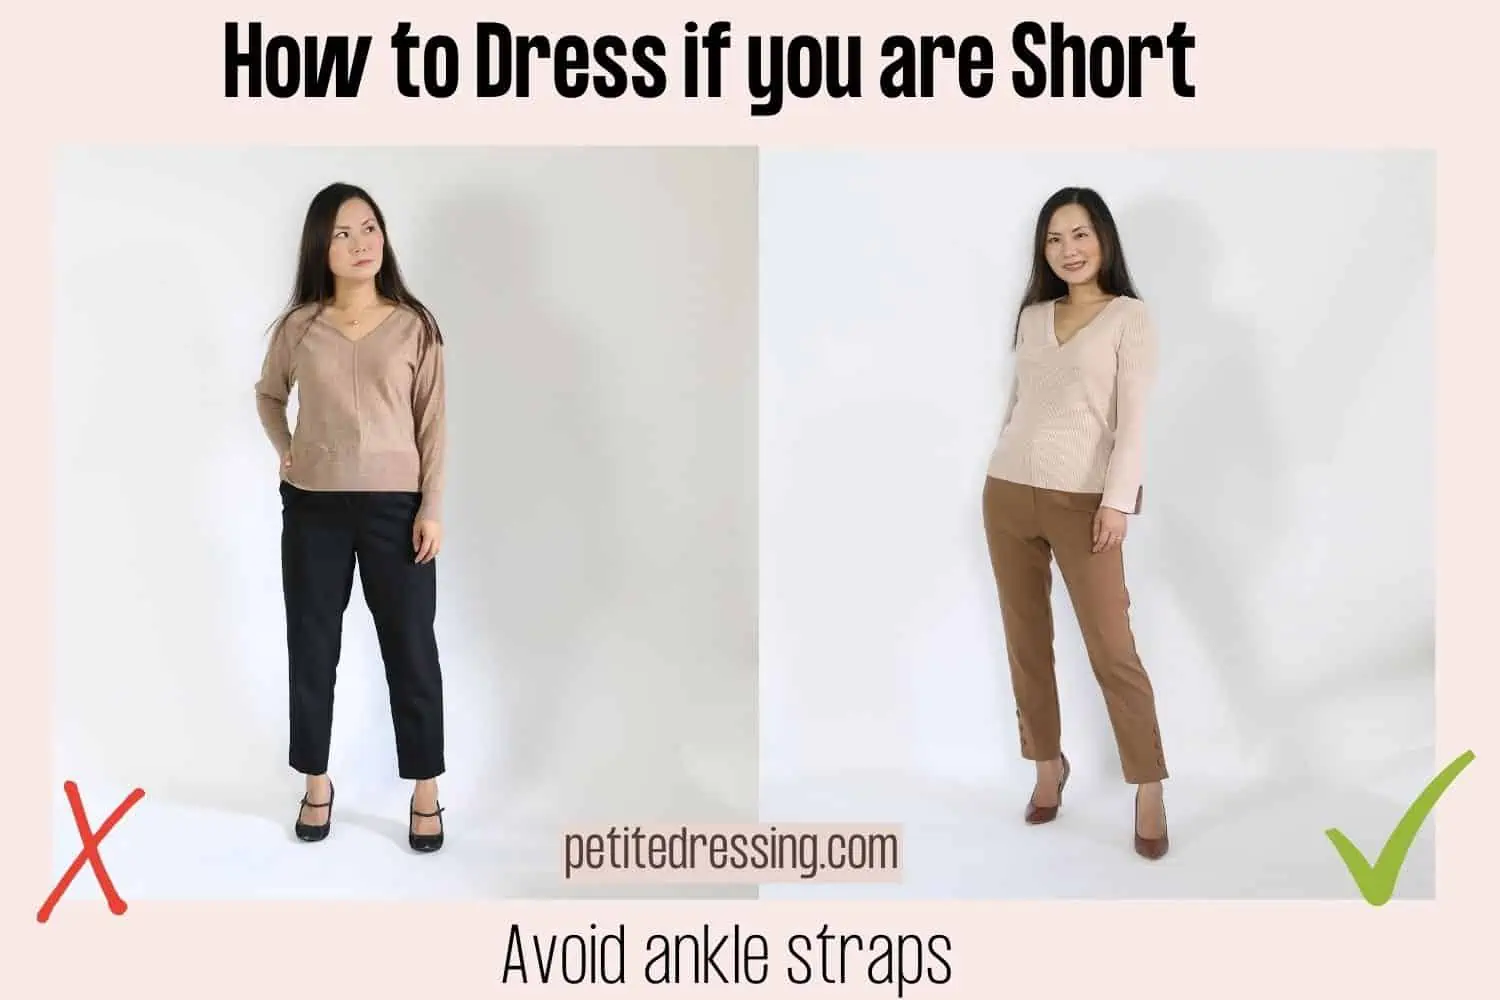 10 Short Cuts to Drop a Dress Size - Healthy Inspirations